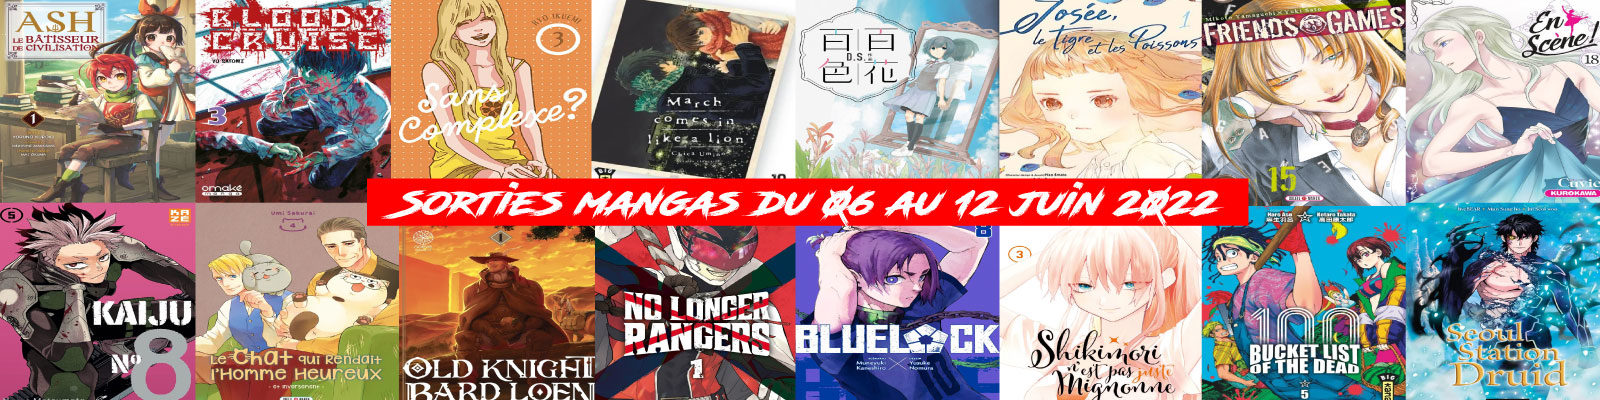 Sorties mangas-du-06-au-12-juin-2022